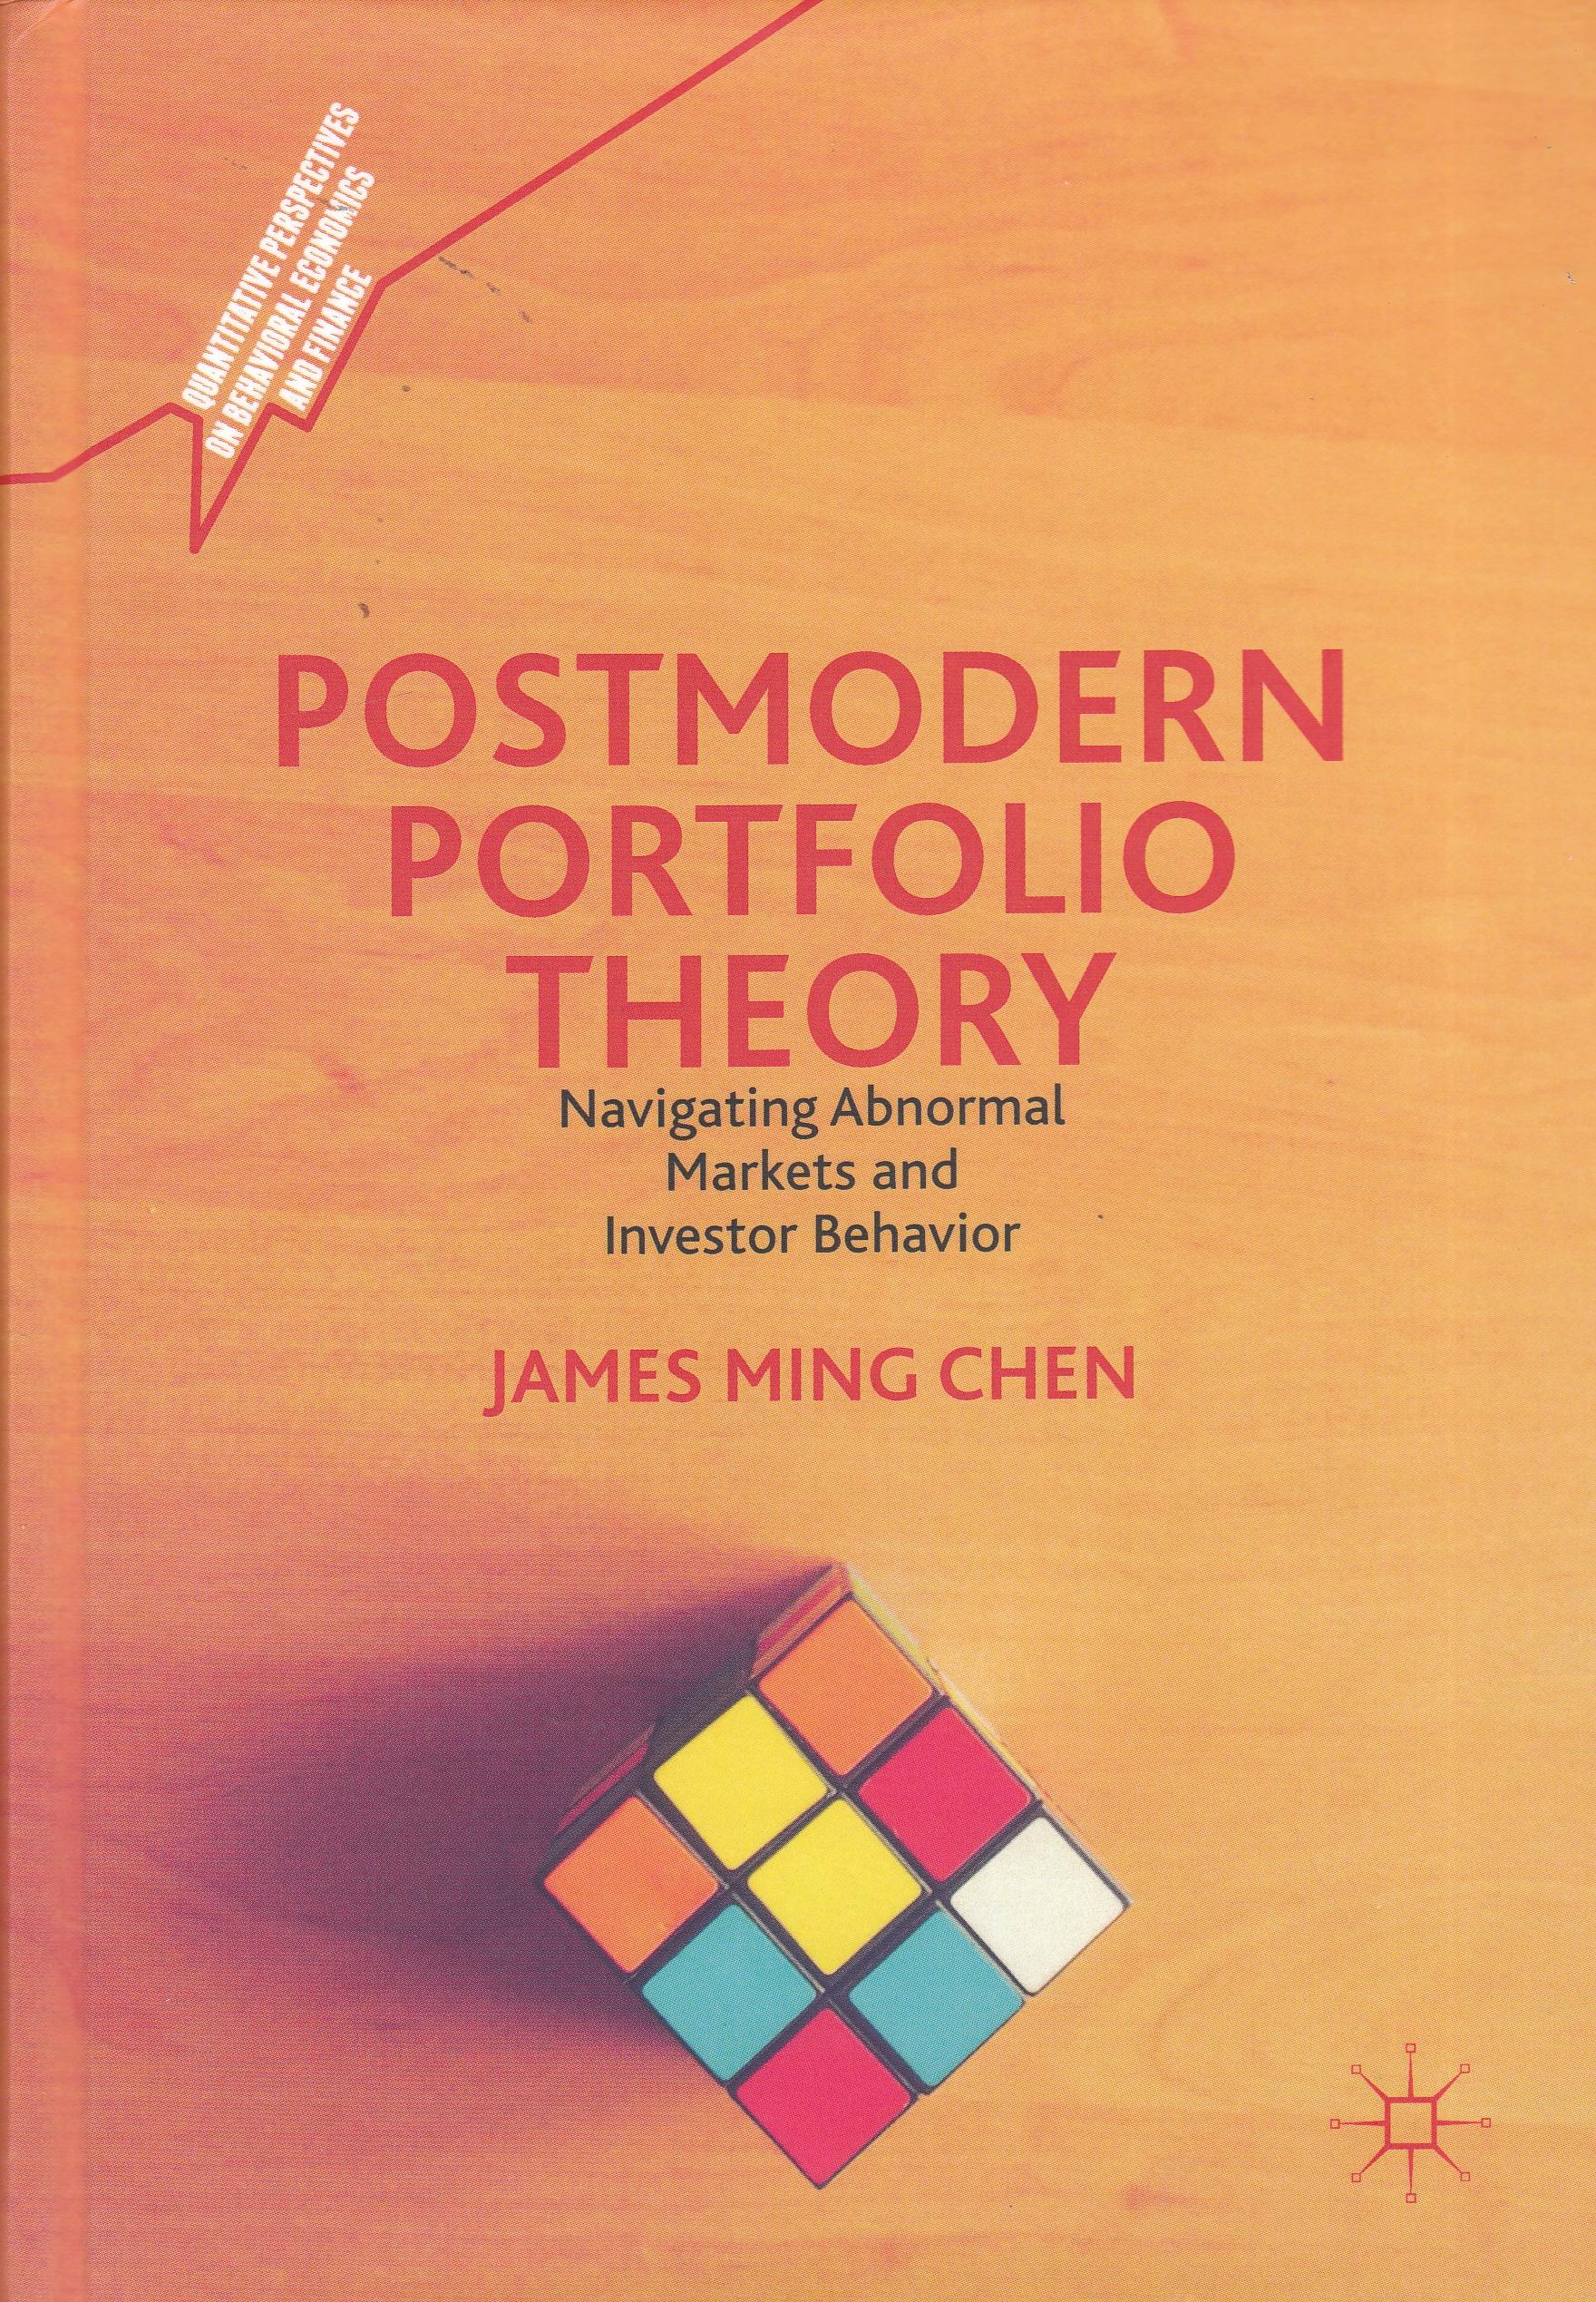 Postmodern Portfolio Theory "Navigating Abnormal Markets and Investor Behavior"